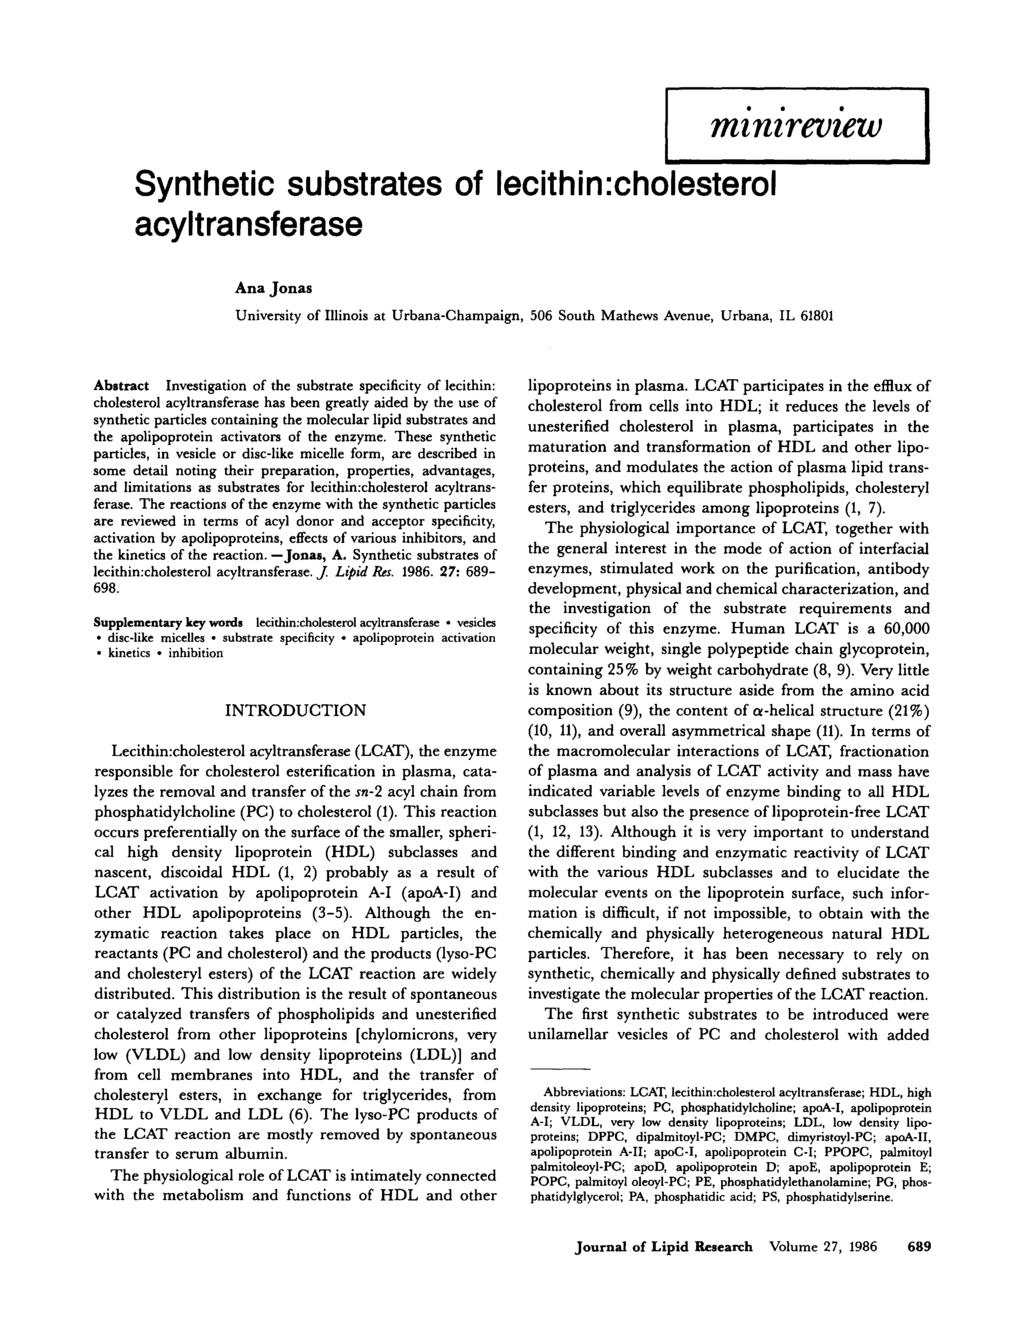 Synthetic substrates of 1ecithin:cholesterol acyltransferase Ana Jonas University of Illinois at Urbana-Champaign, 506 South Mathews Avenue, Urbana, IL 61801 Abstract Investigation of the substrate